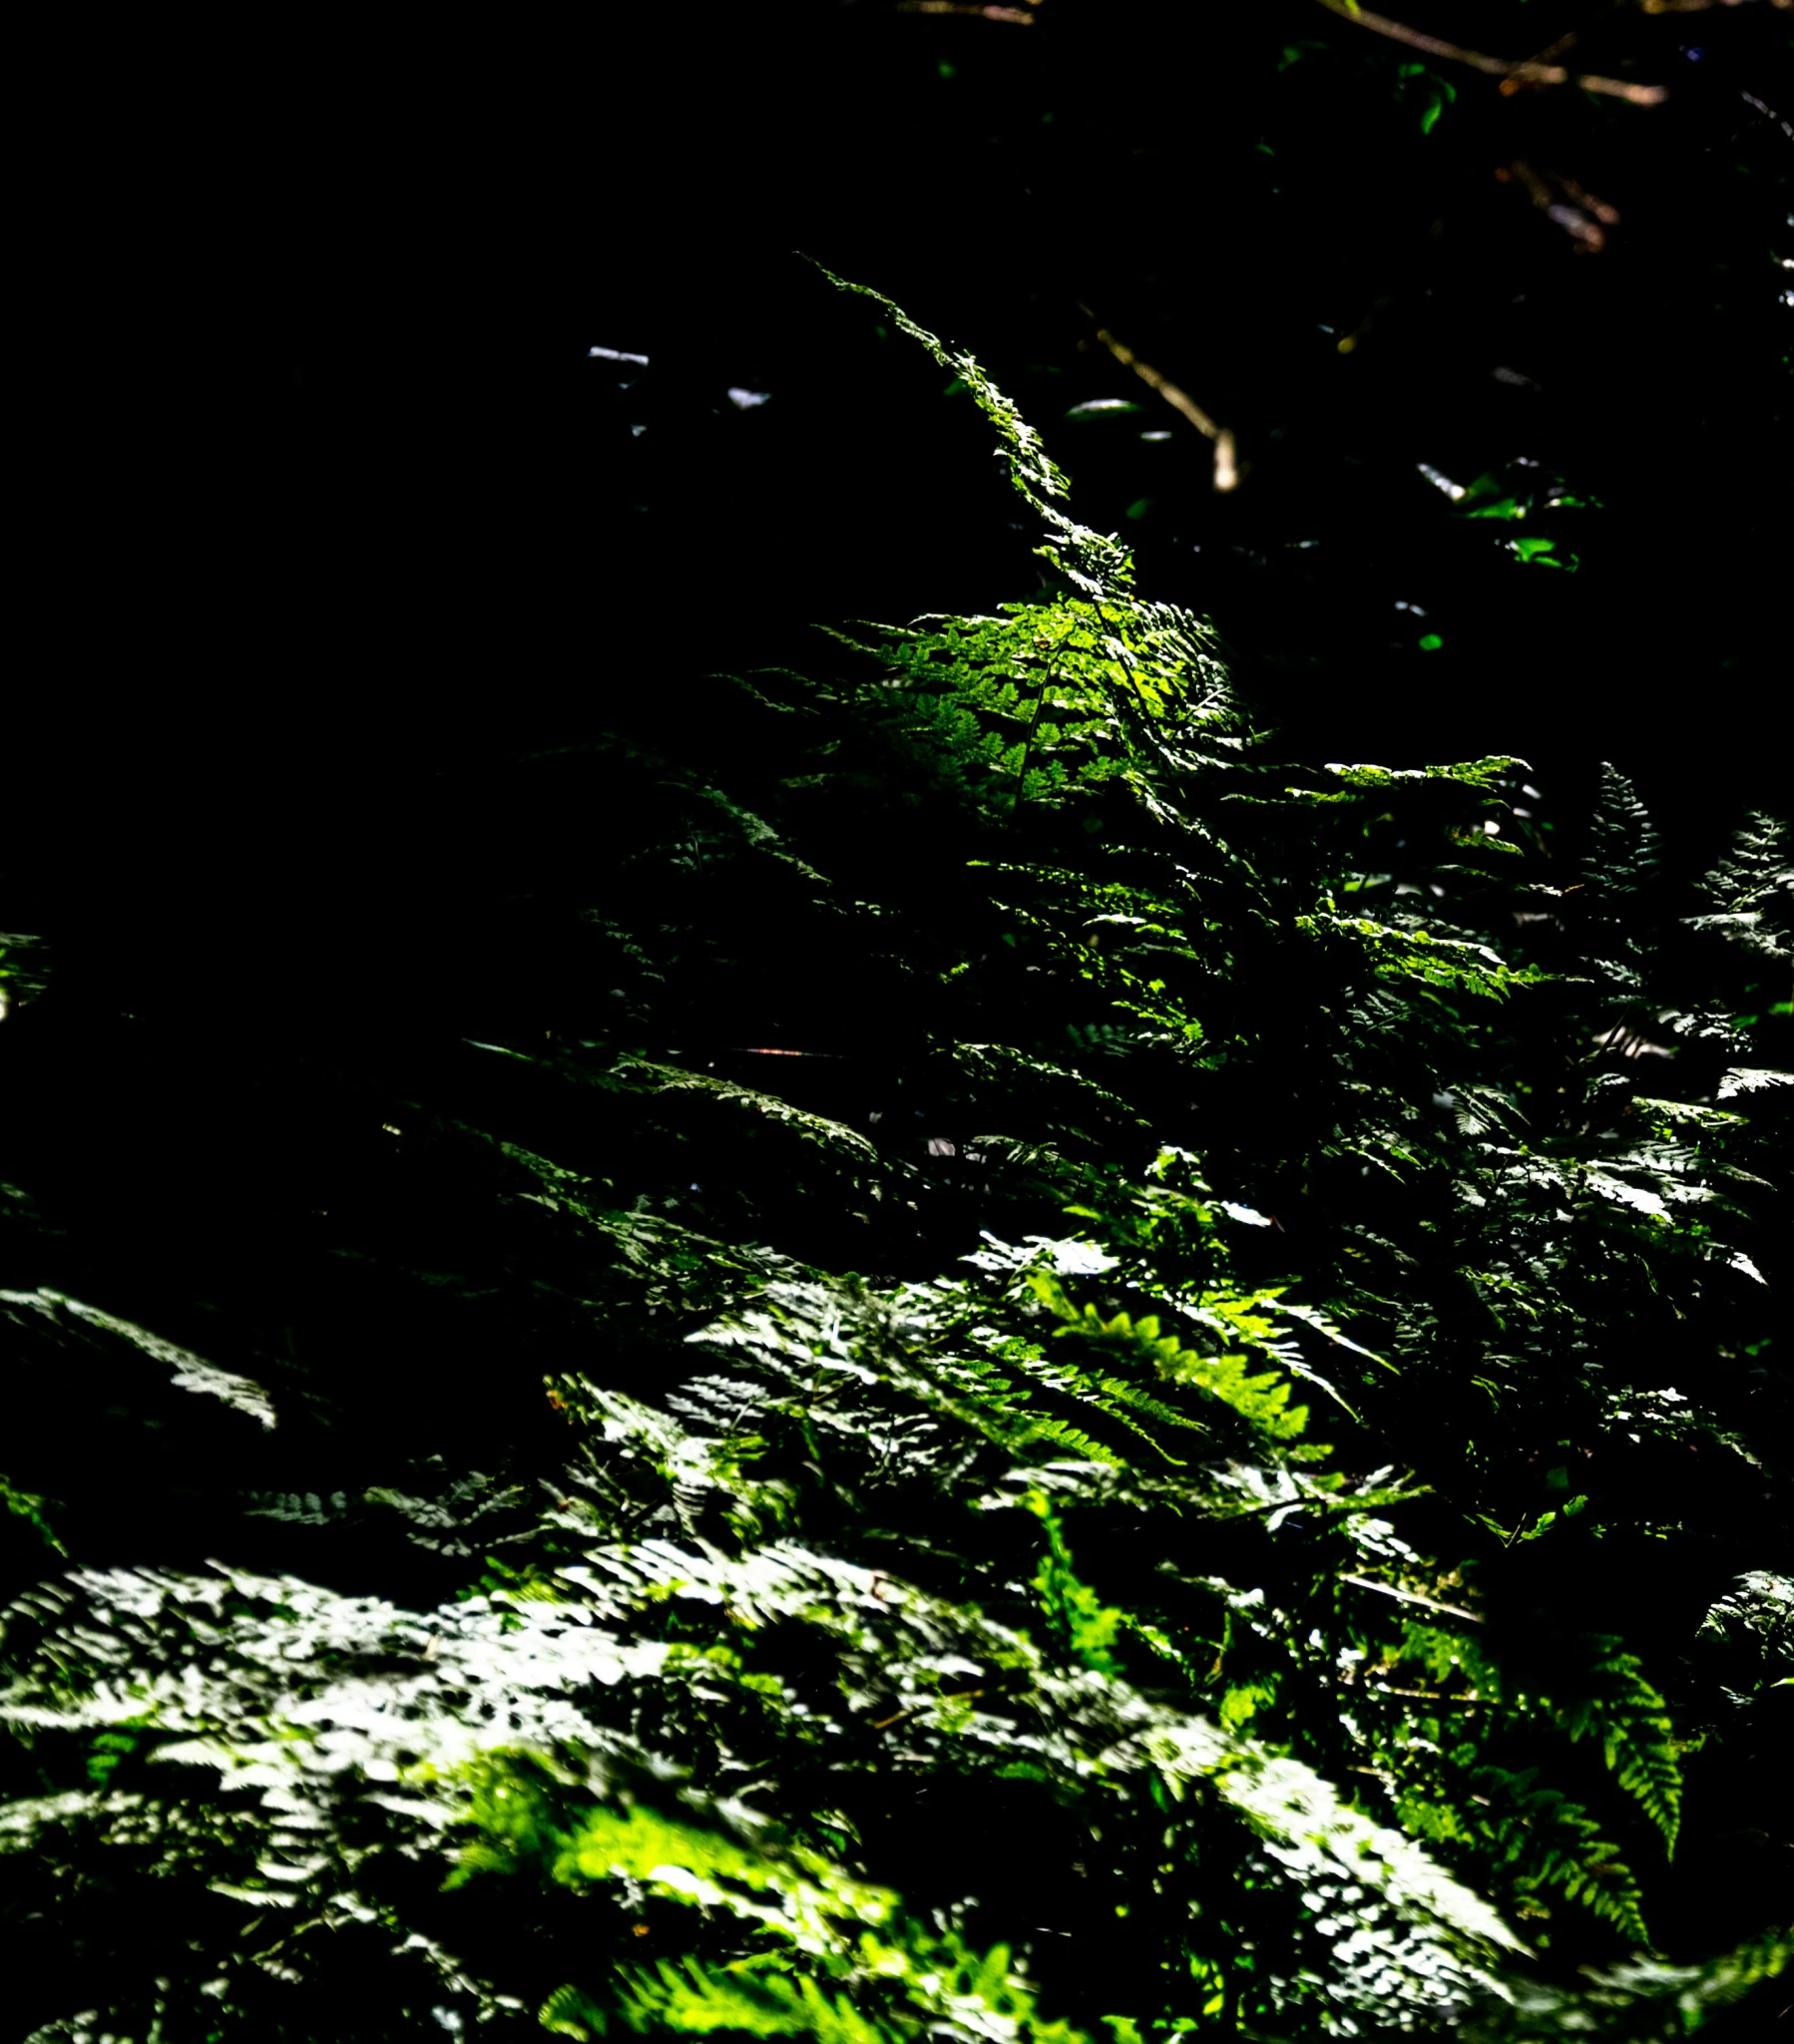 blurry s of vegetation on black background